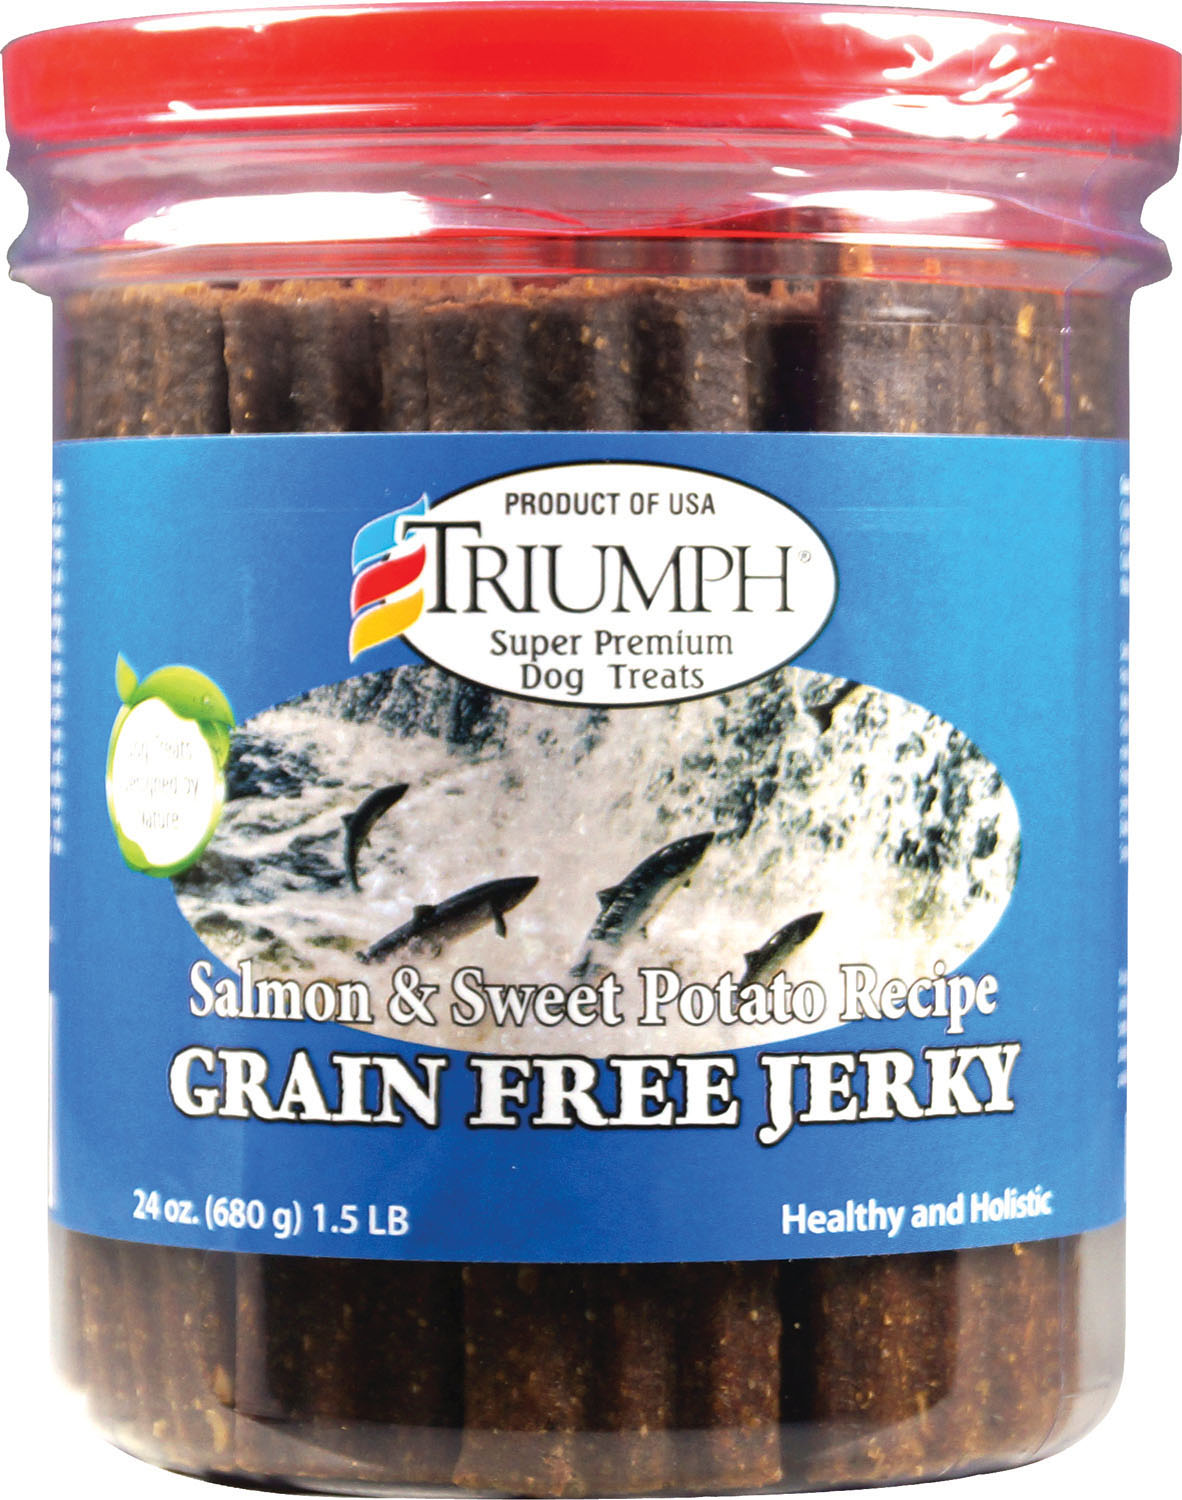 Grain Free Jerky Treats (Option 1: 24 Oz, Option 2: Salmon/swtpotat)